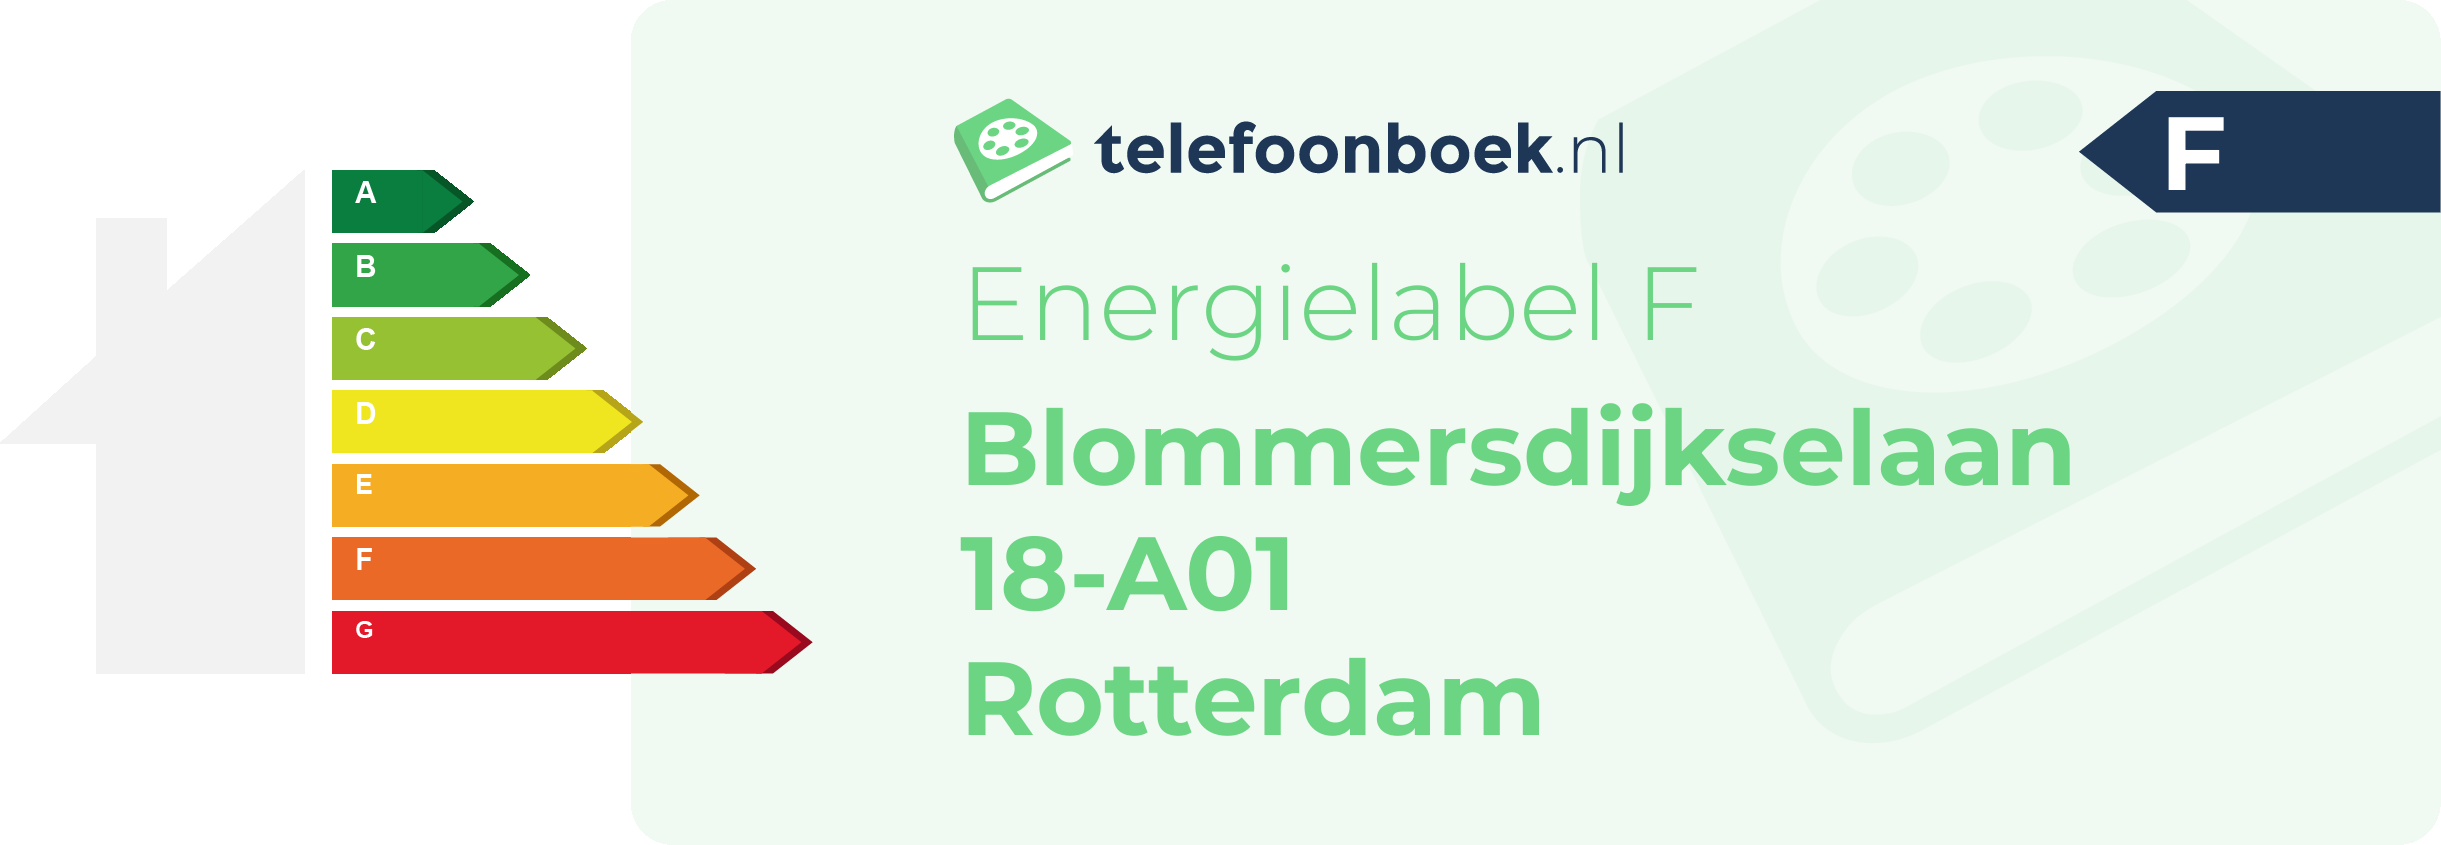 Energielabel Blommersdijkselaan 18-A01 Rotterdam